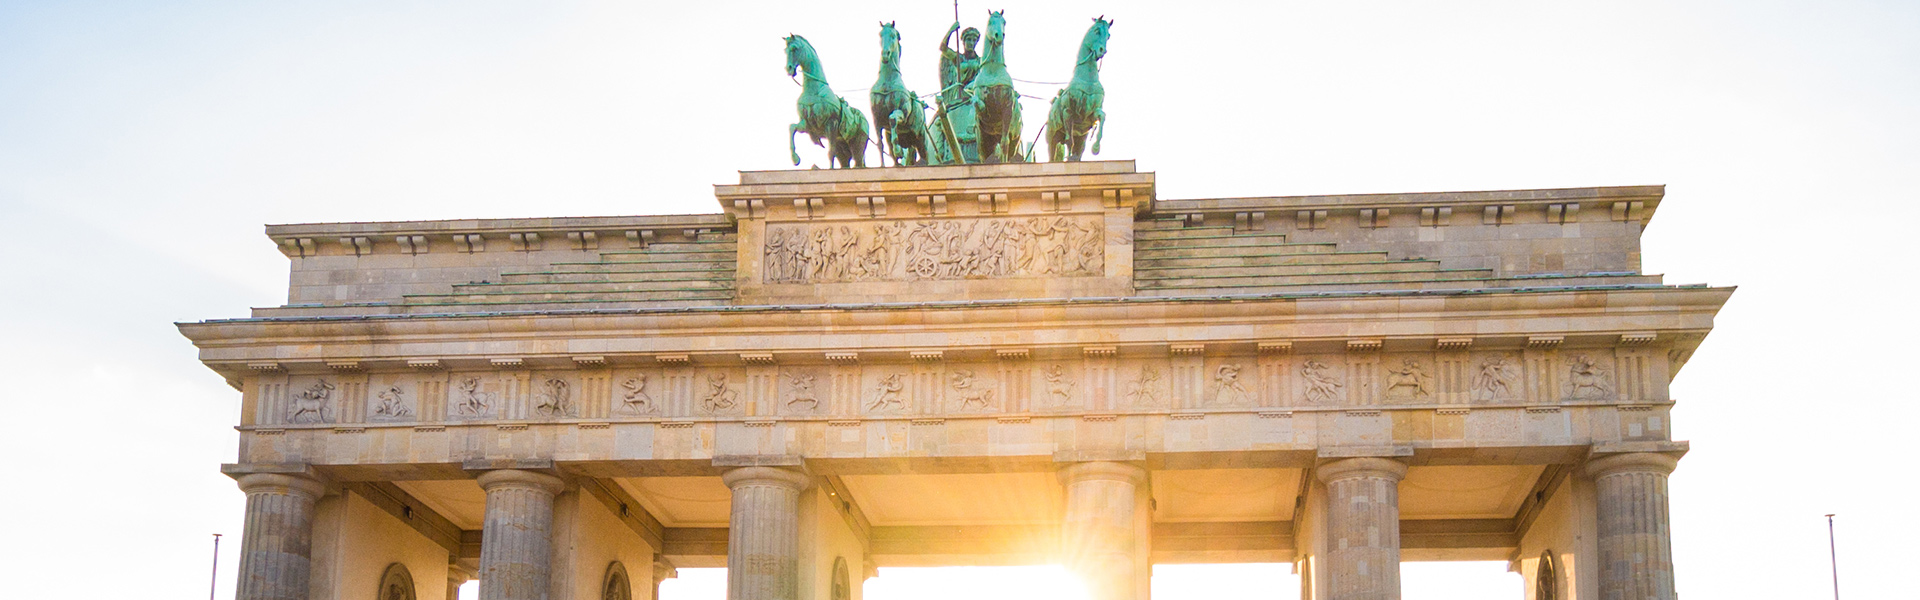 Brandenburg Gate Berlin In Berlin Big Bus Tours